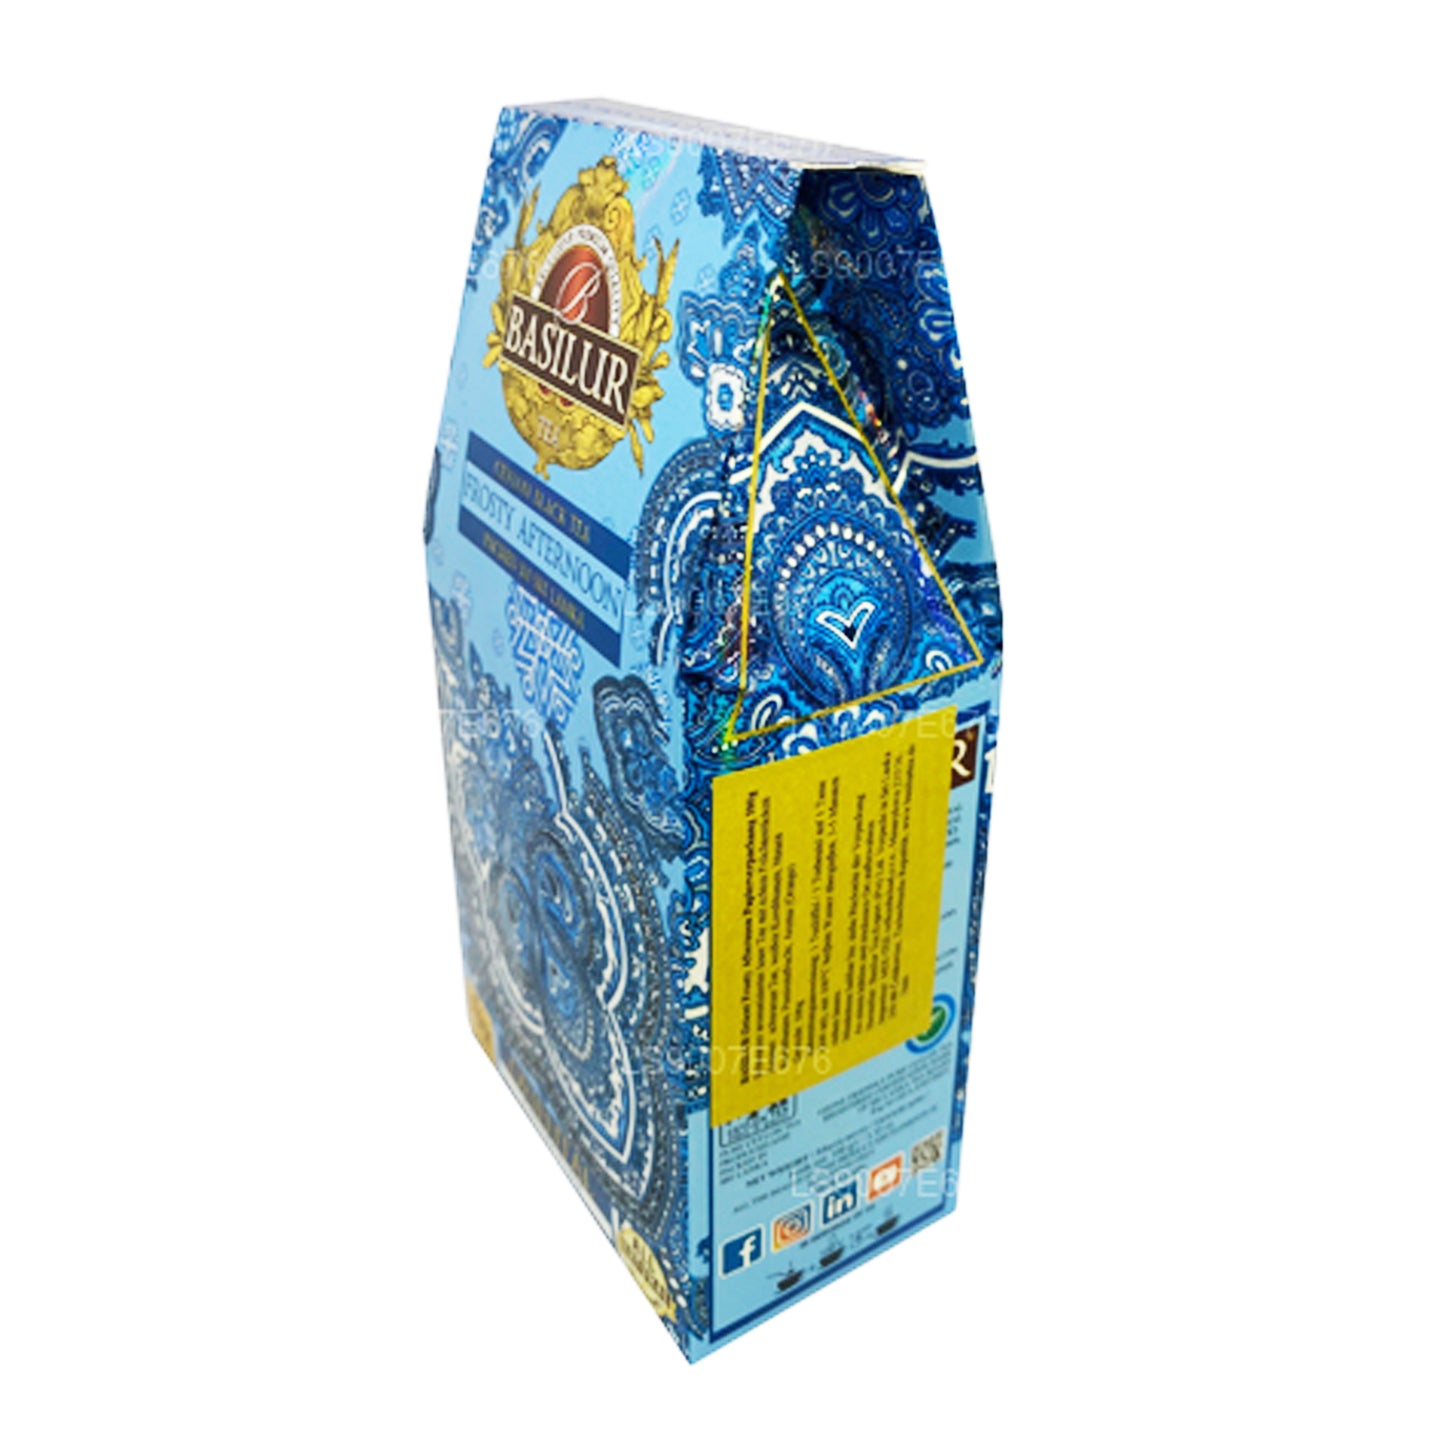 Basilur (orientalisk) frostig eftermiddag Ceylon svart te (100g)